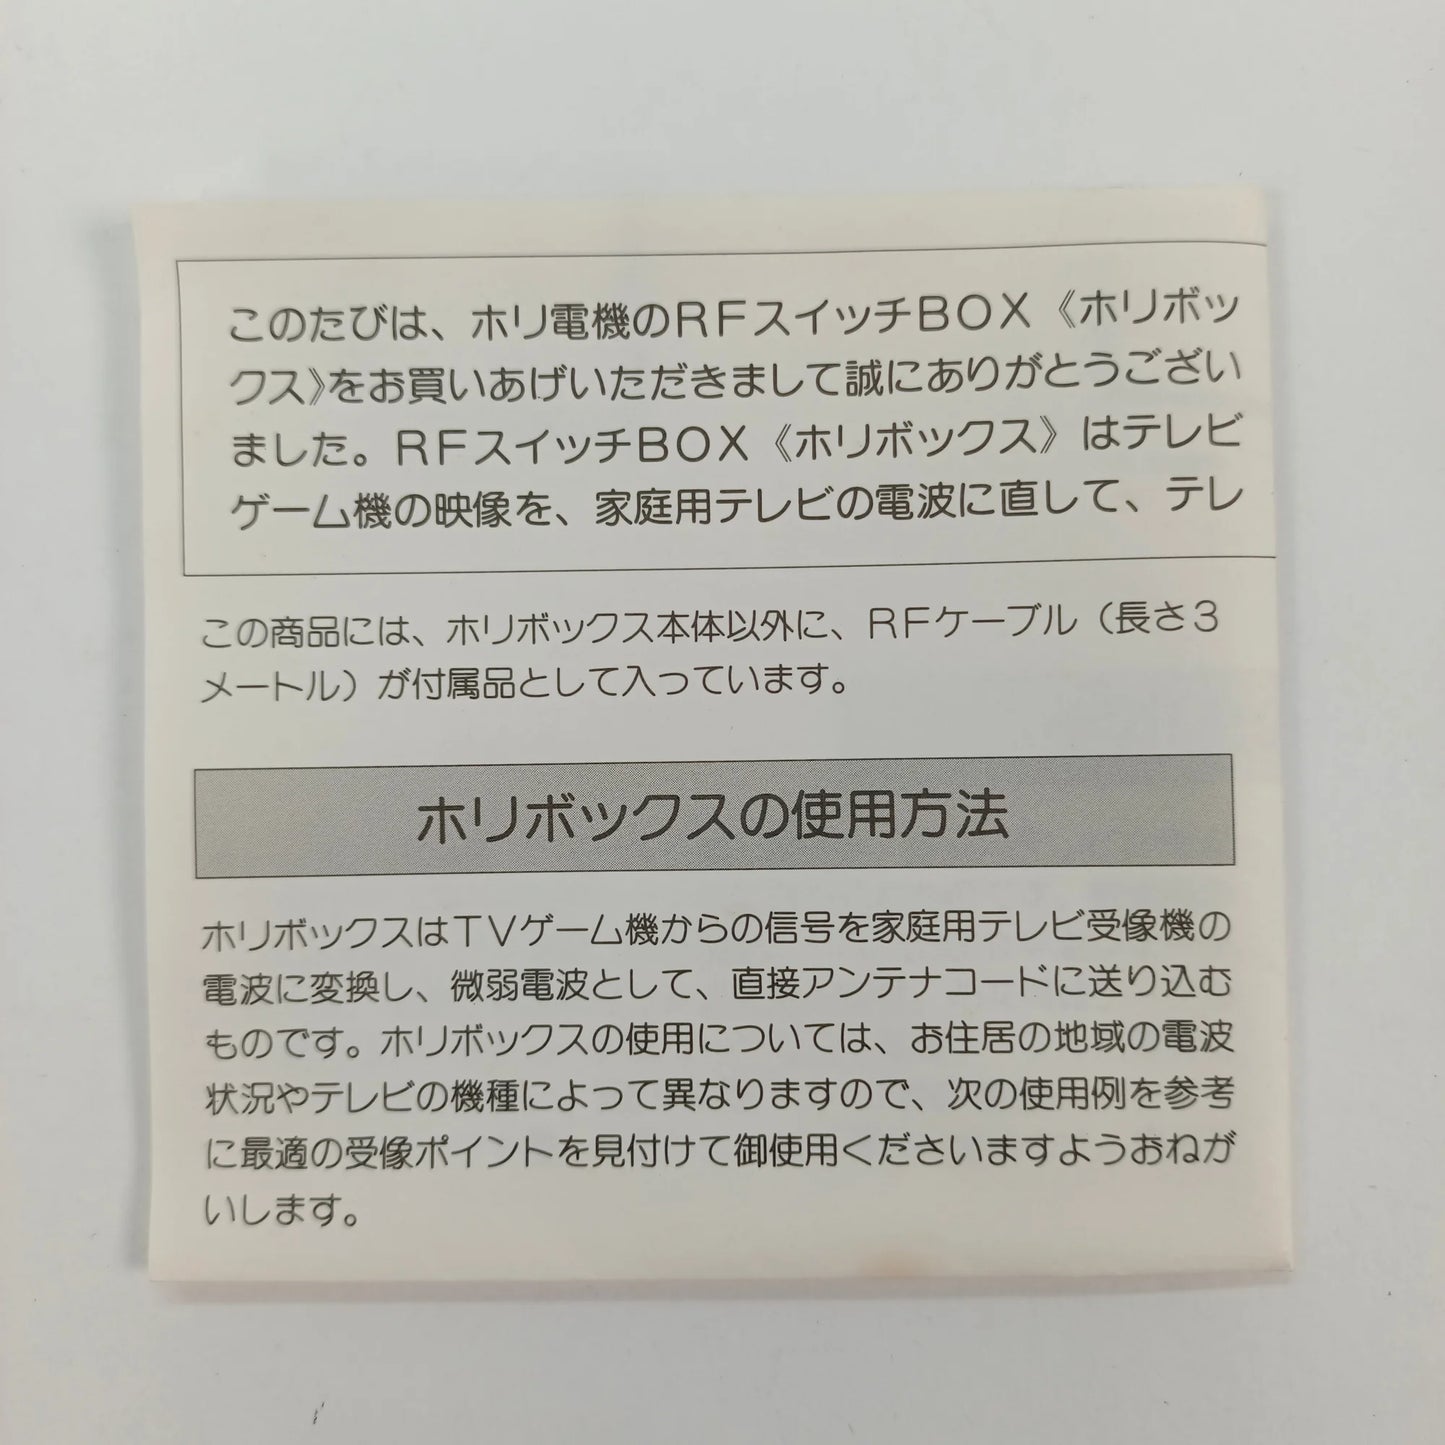 RF Switch BOX